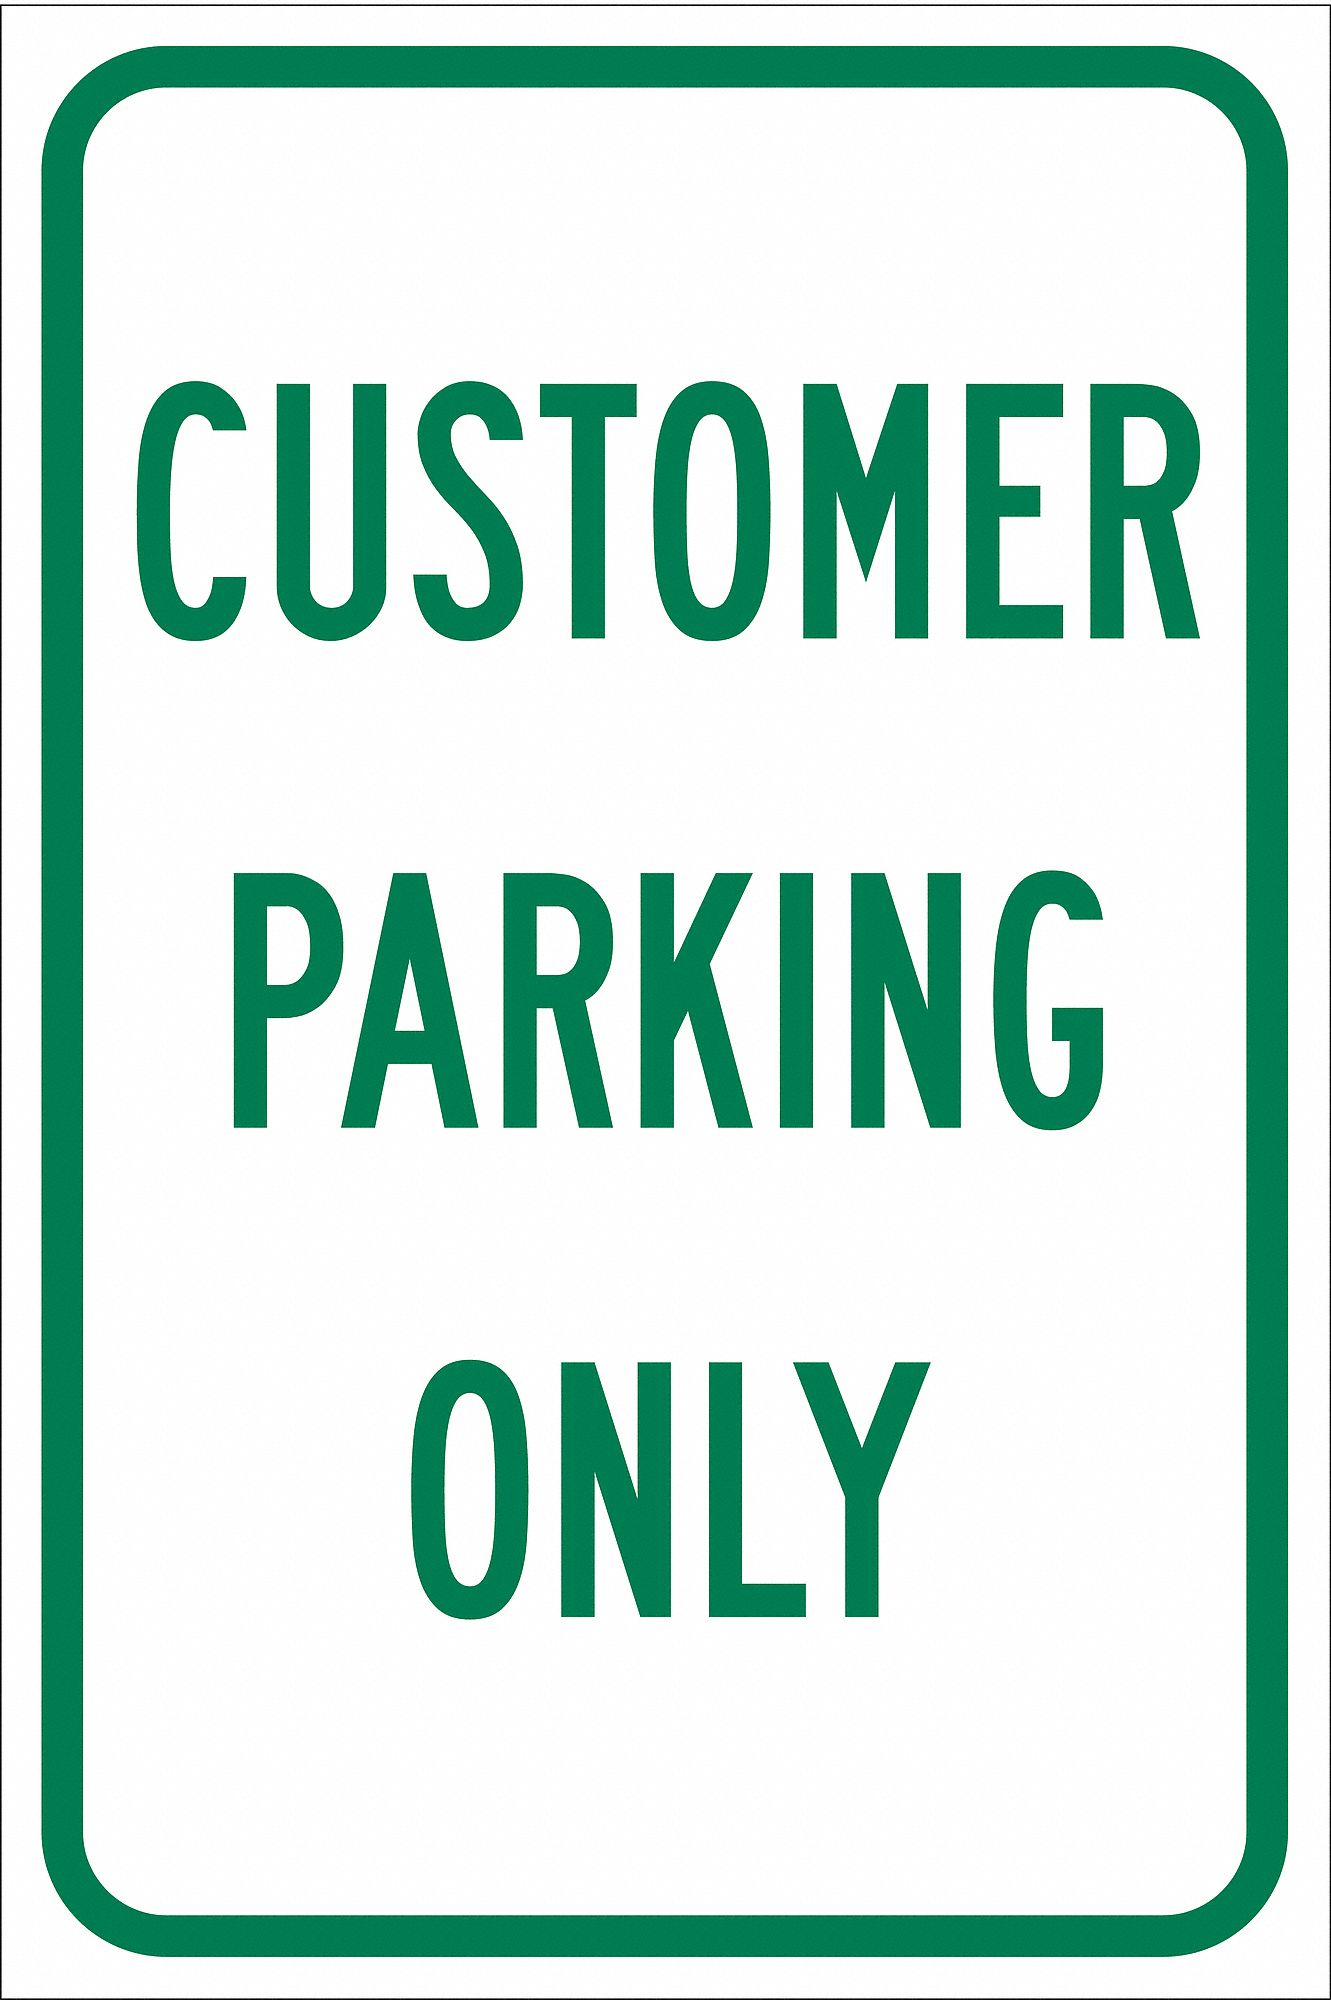 TextCustomer Parking Only Engineer Grade Aluminum, Parking Sign Height 18